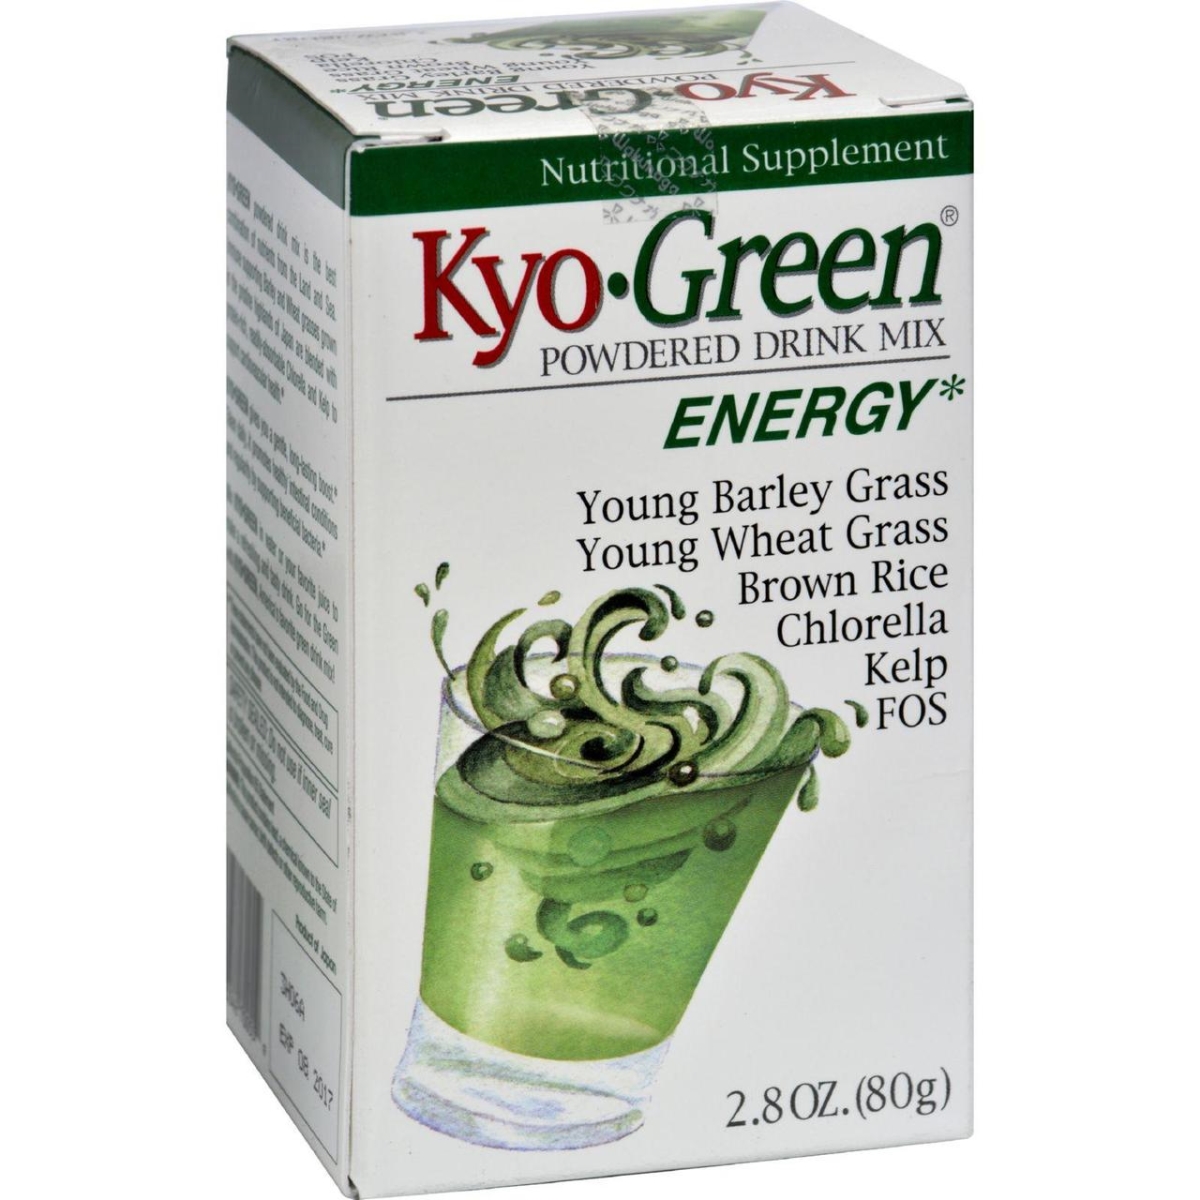 Hg0188904 2 Oz Kyo-green Energy Powdered Drink Mix